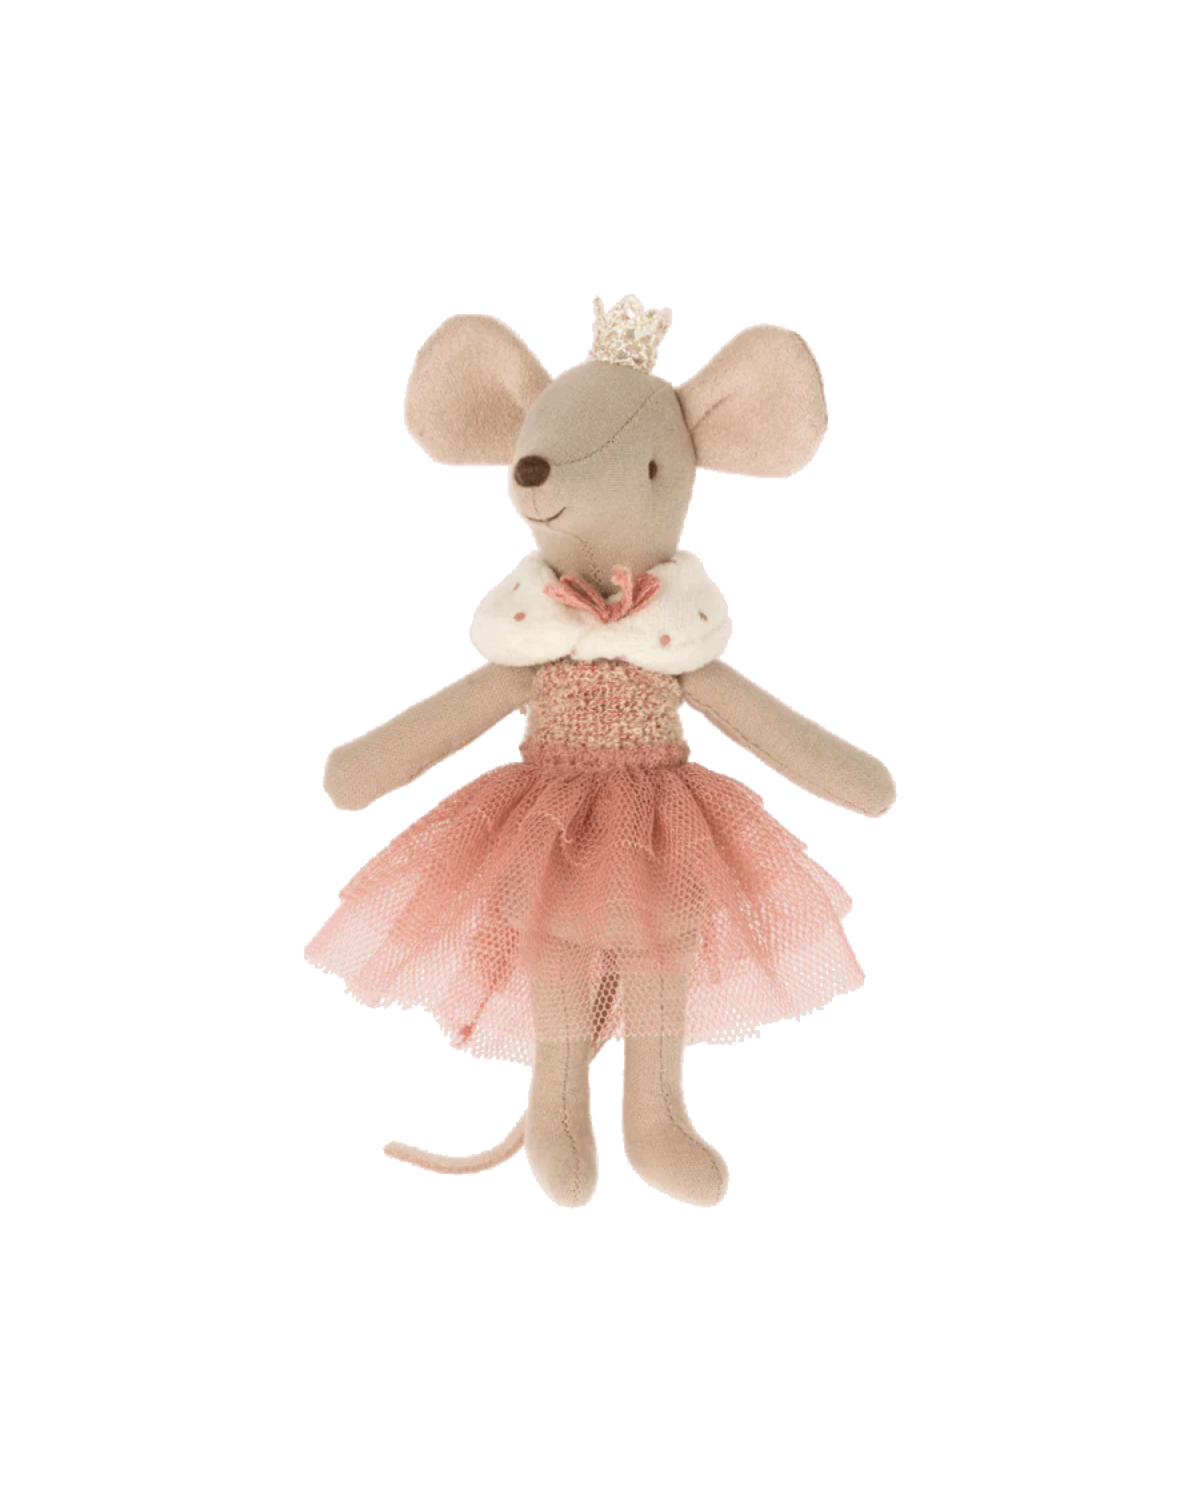 Maileg Big Sister Princess Mouse - Dusty Rose (Older Version)